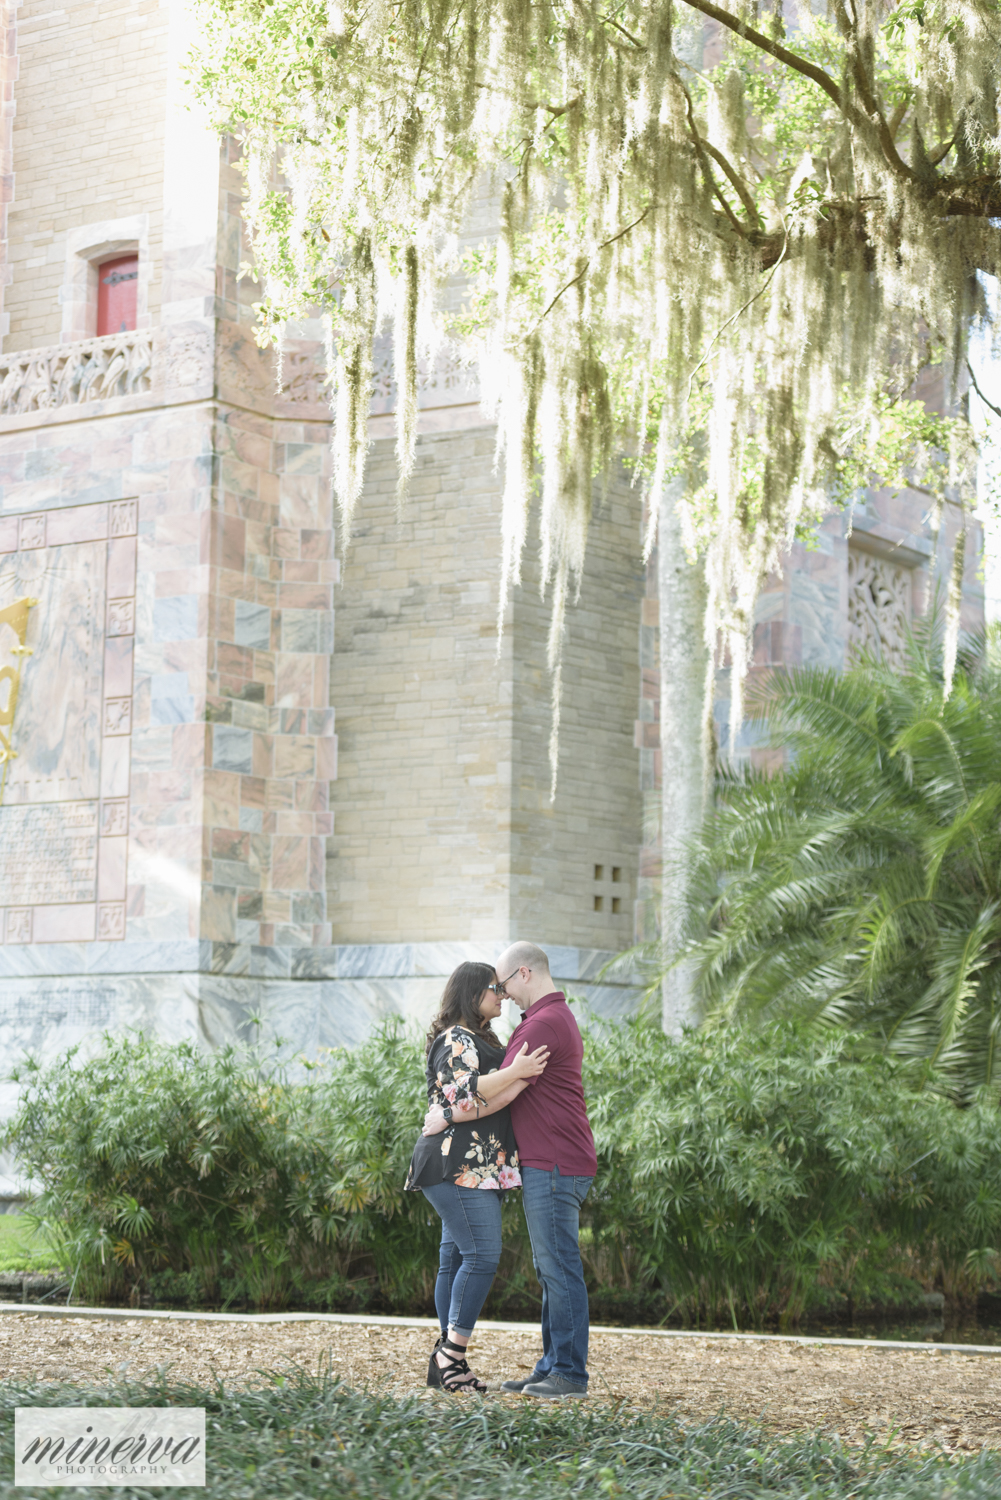 002_bok-tower-gardens_wedding-engagement-portrait-orlando-photography_central-florida-photographer